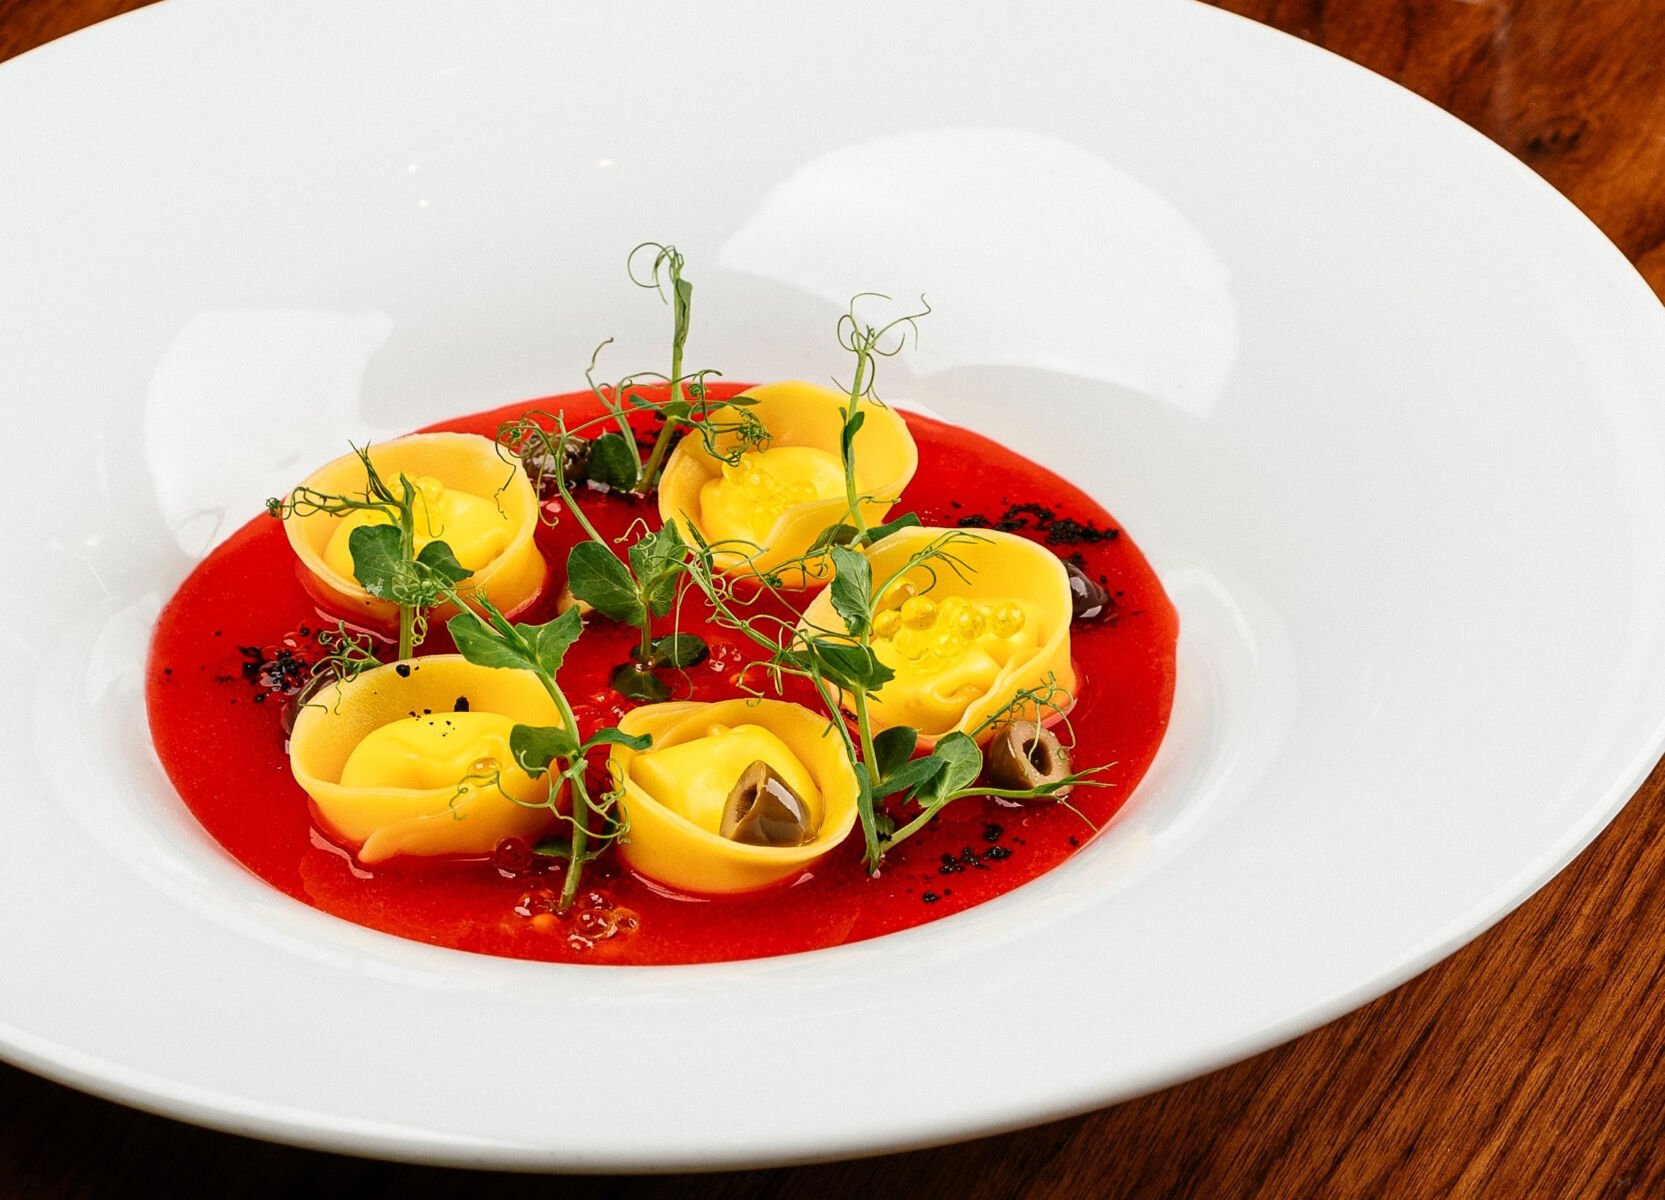 Discover Bangkok’s finest contemporary Italian Cuisine with Rossini’s enticing new à la carte menu